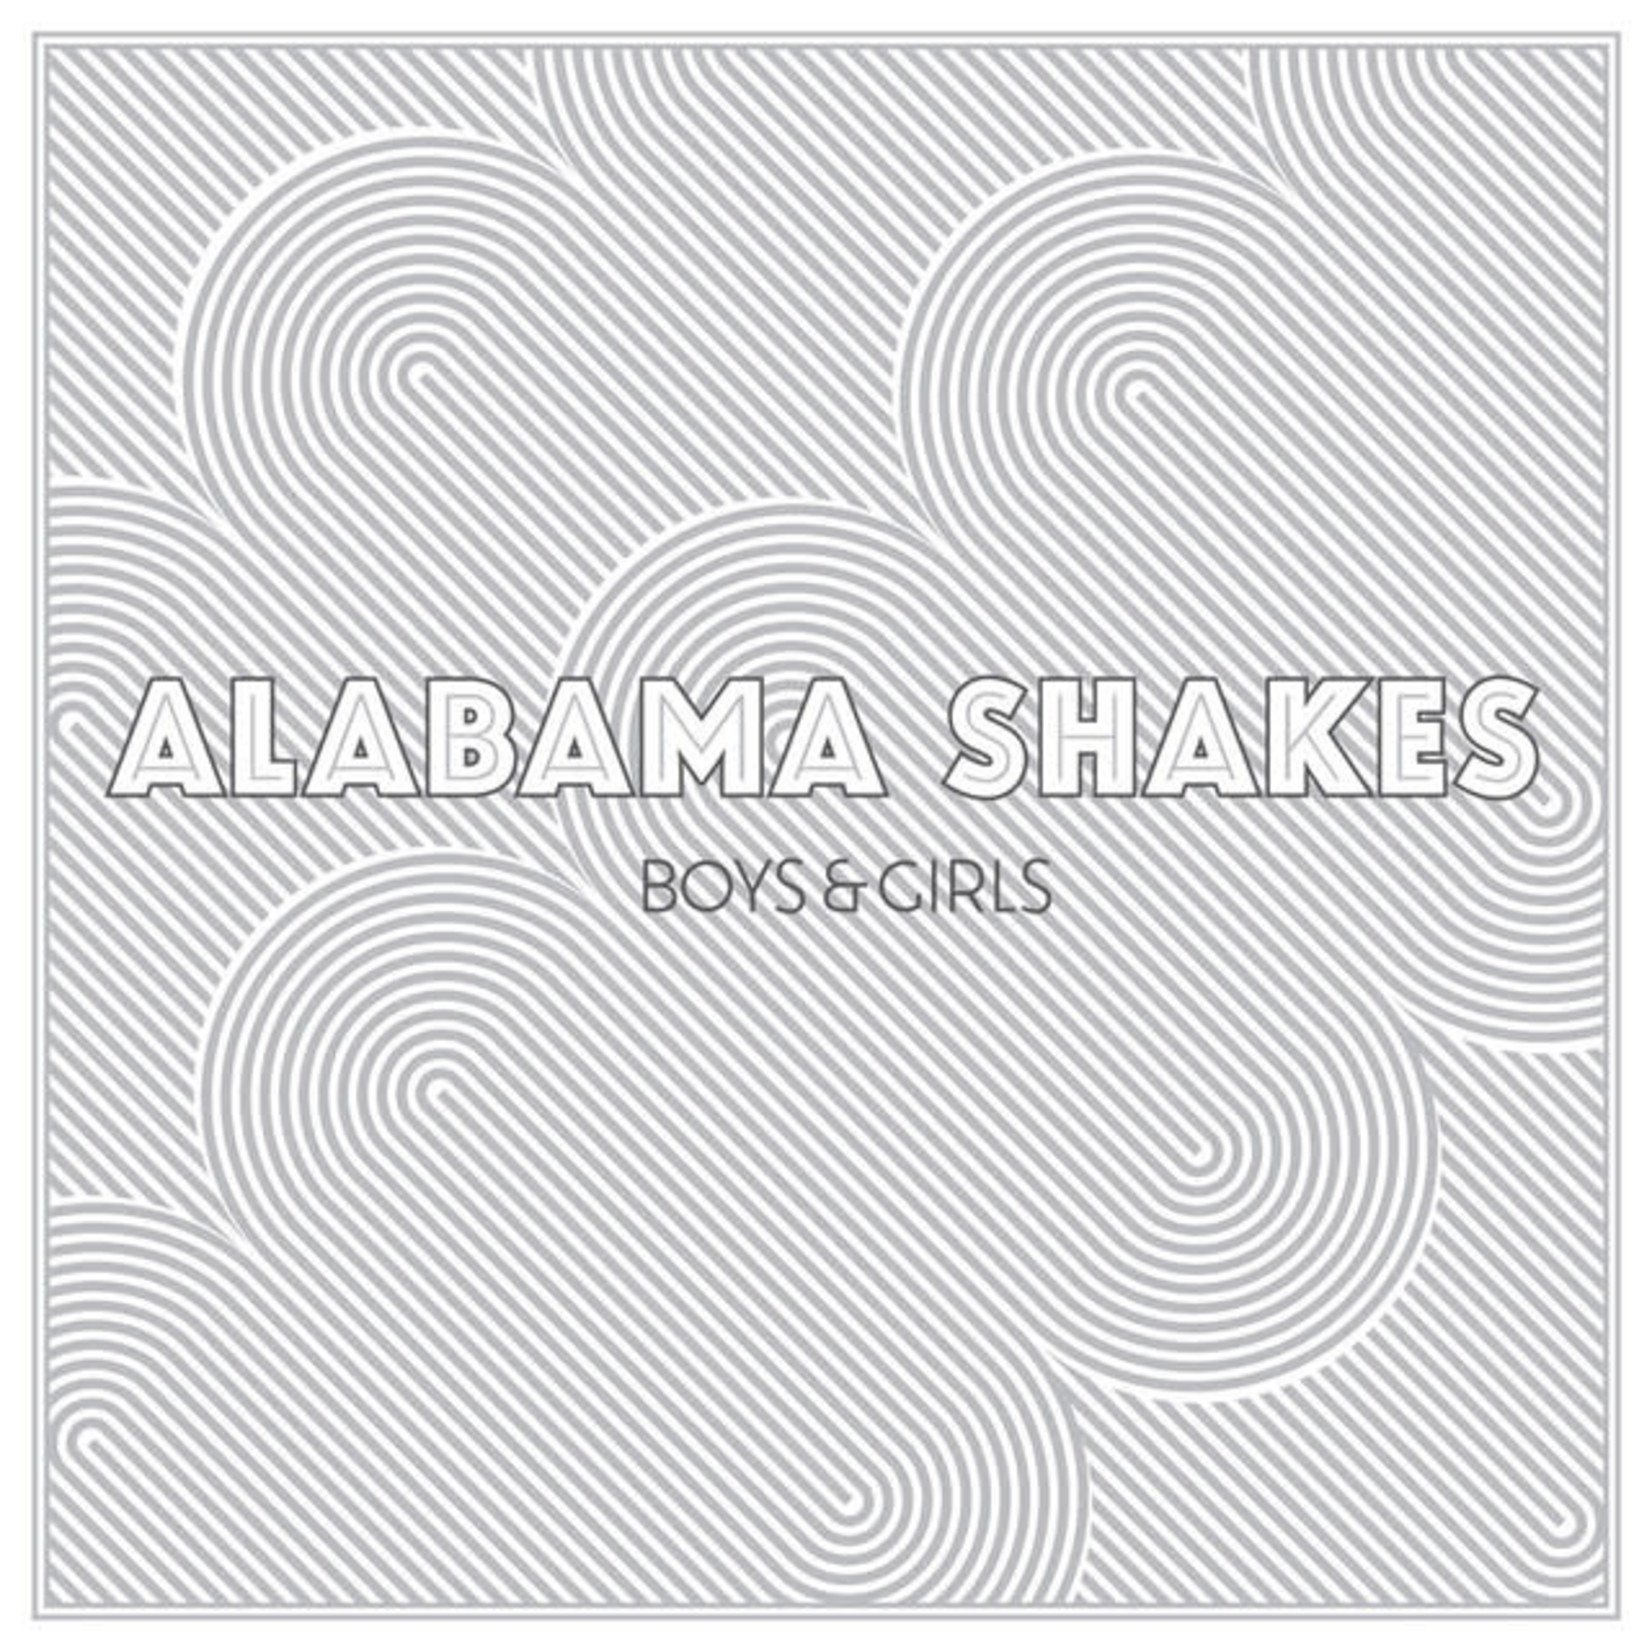 Vinyl Alabama Shakes - Boys & Girls